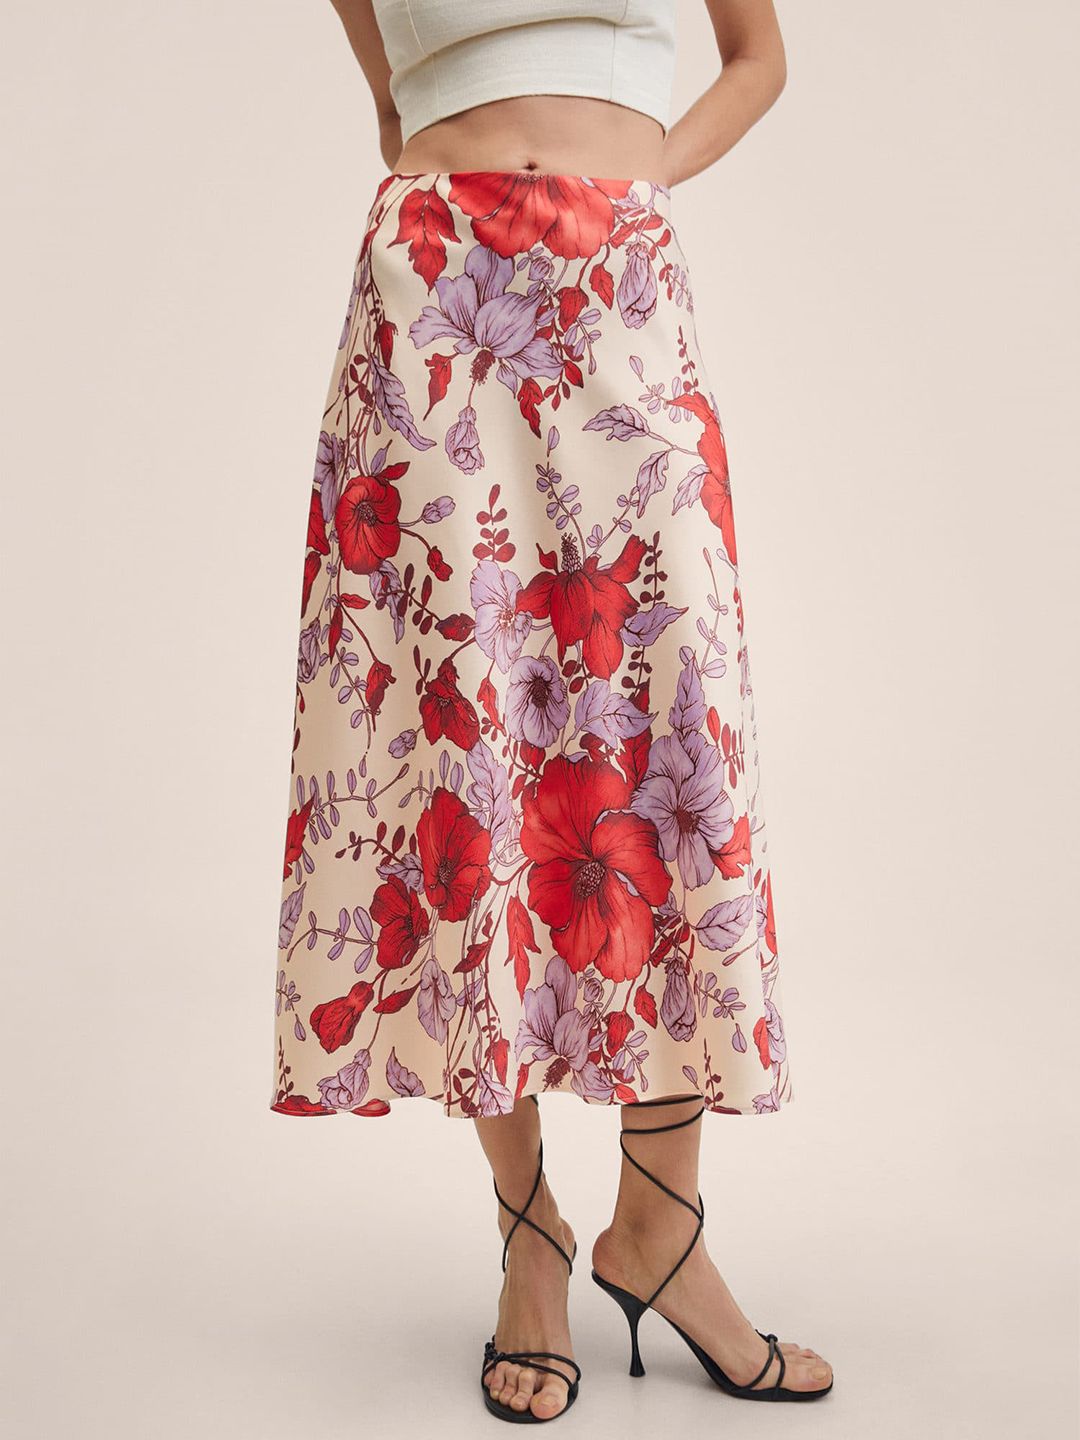 MANGO Women Off-White & Lavender Floral Printed Midi Skirt Price in India